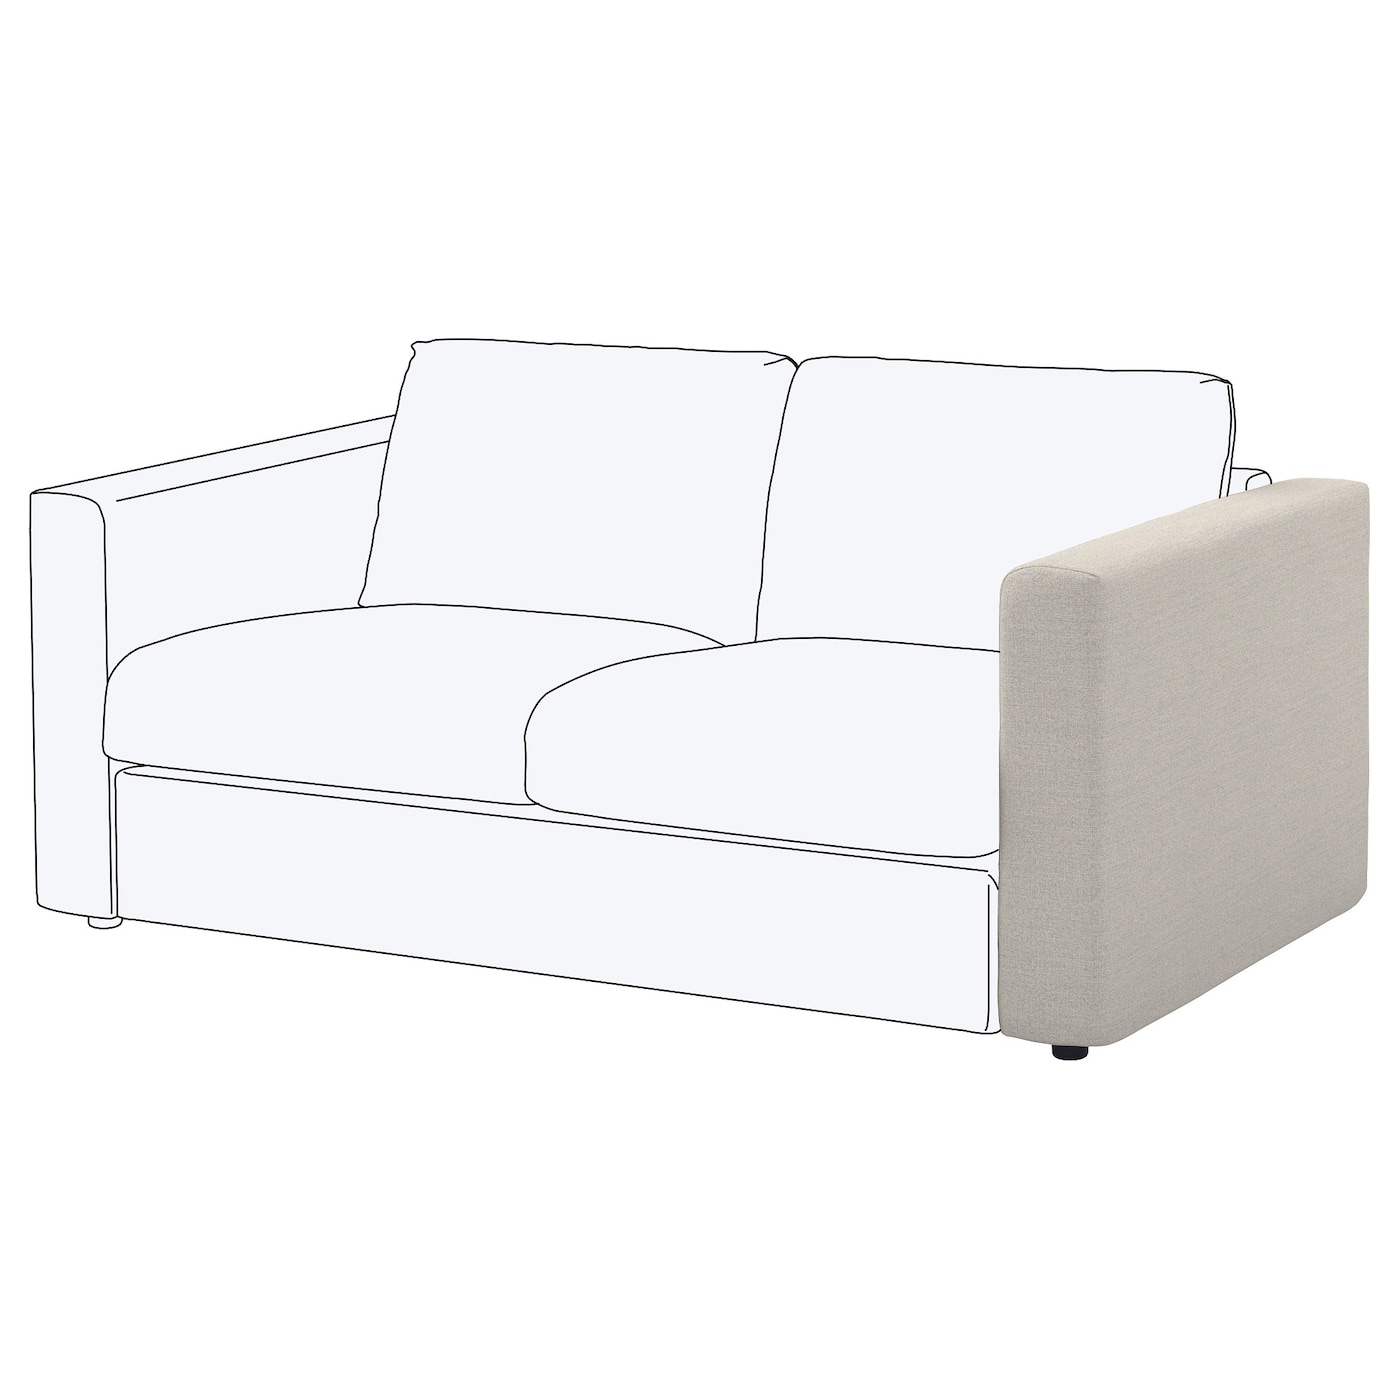 Подлокотник для дивана - IKEA VIMLE/ ВИМЛЕ ИКЕА, 93х61х15 см, бежевый